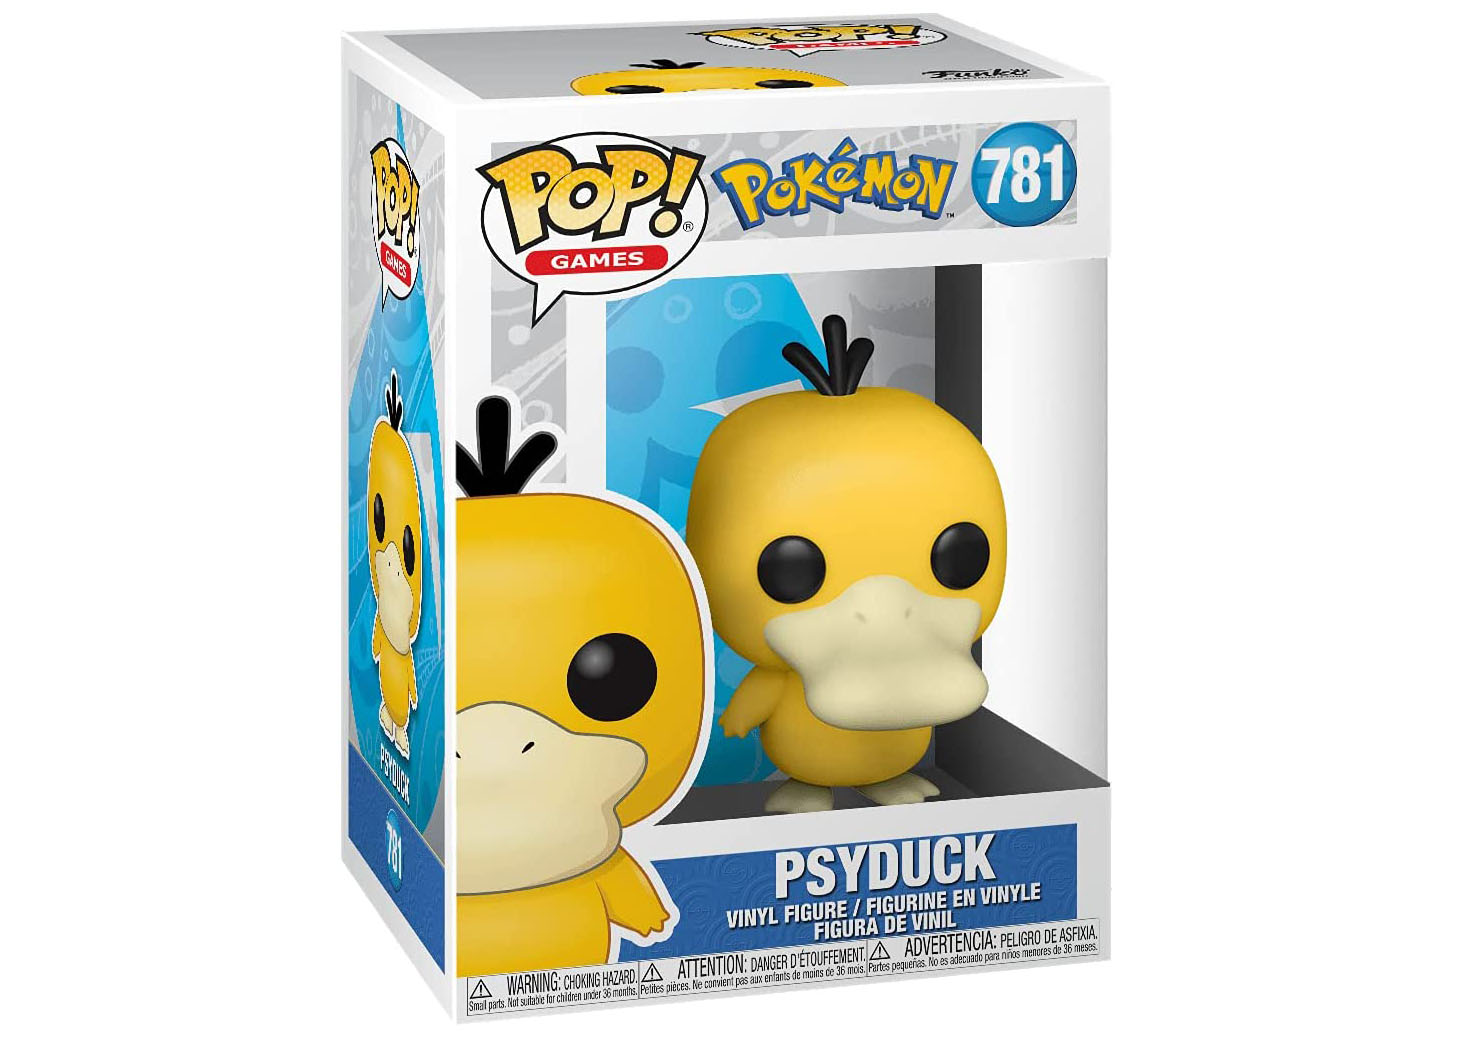 Psyduck #781 Pop Pokemon Vinyl 